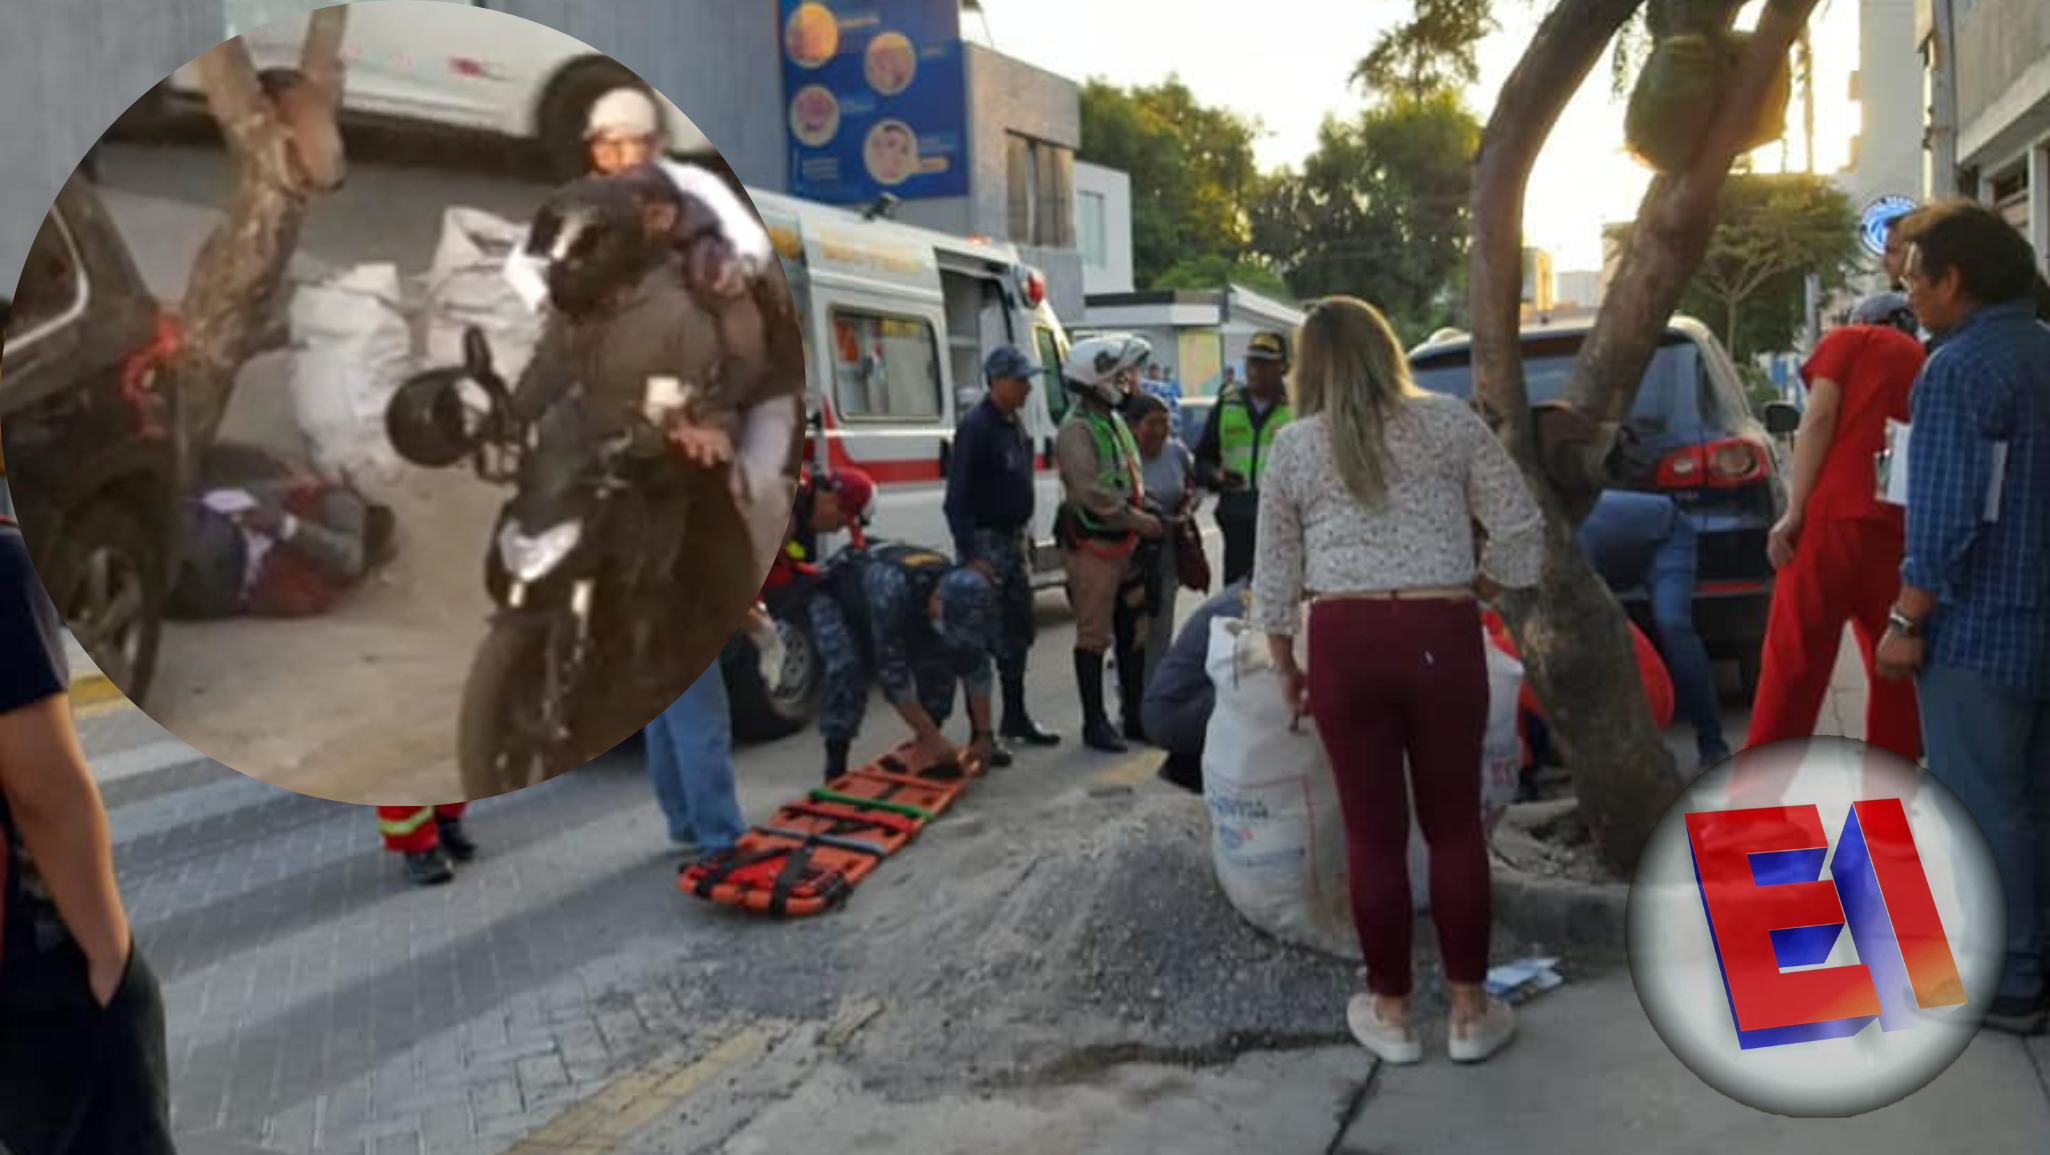 Ministerio Público confirma que cambista asaltado en Arequipa recibió 4 disparos antes de ser despojado de 15 mil dólares